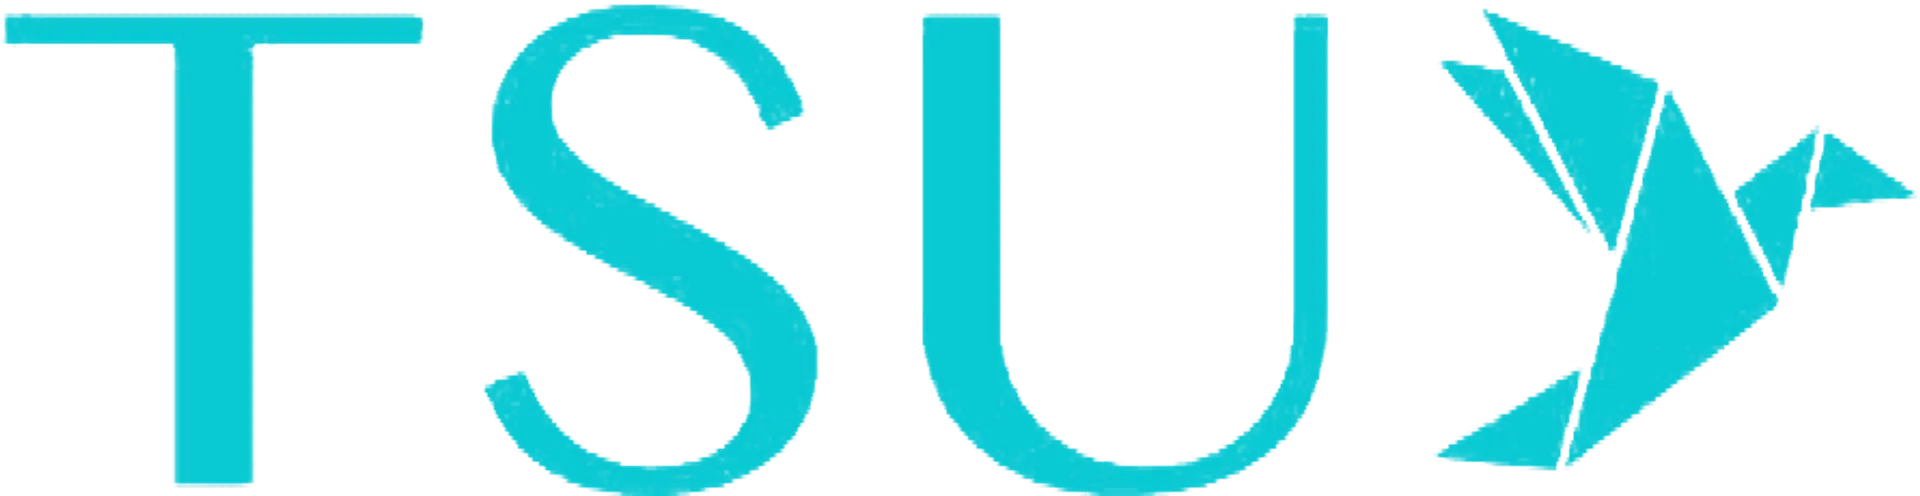 TSU COSMÉTICOS logo